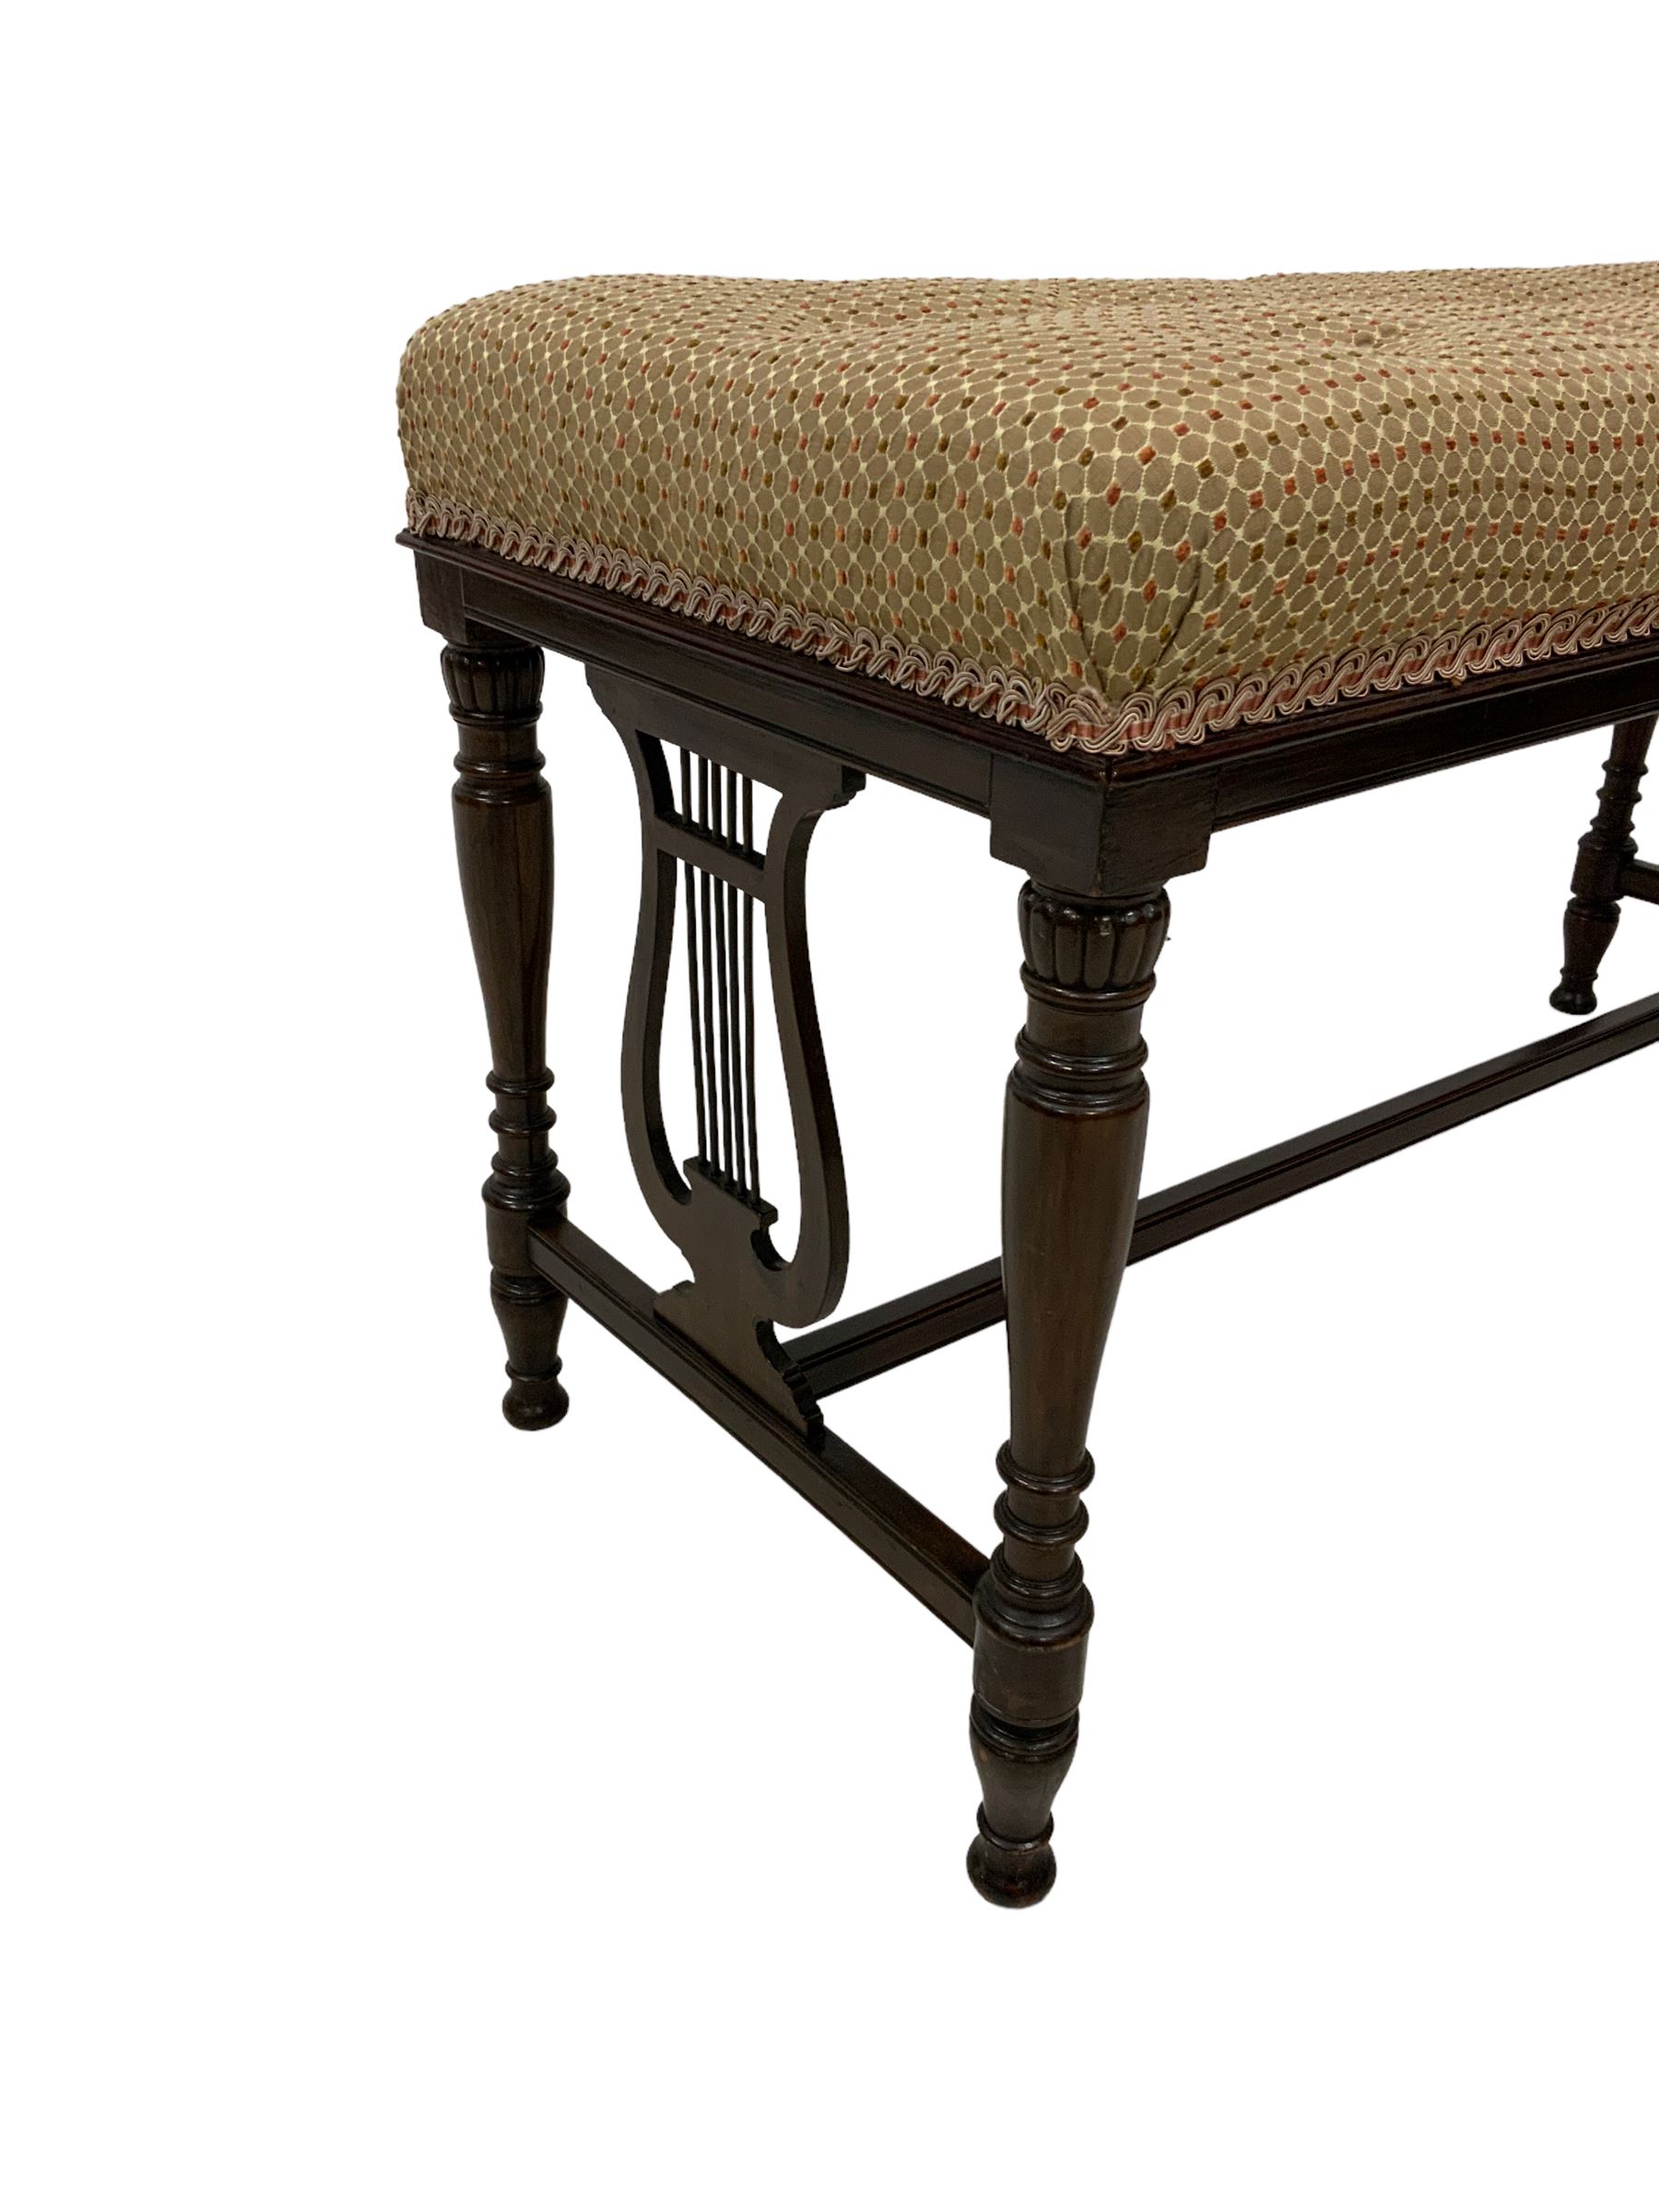 Regency design walnut piano duet stool - Image 5 of 8